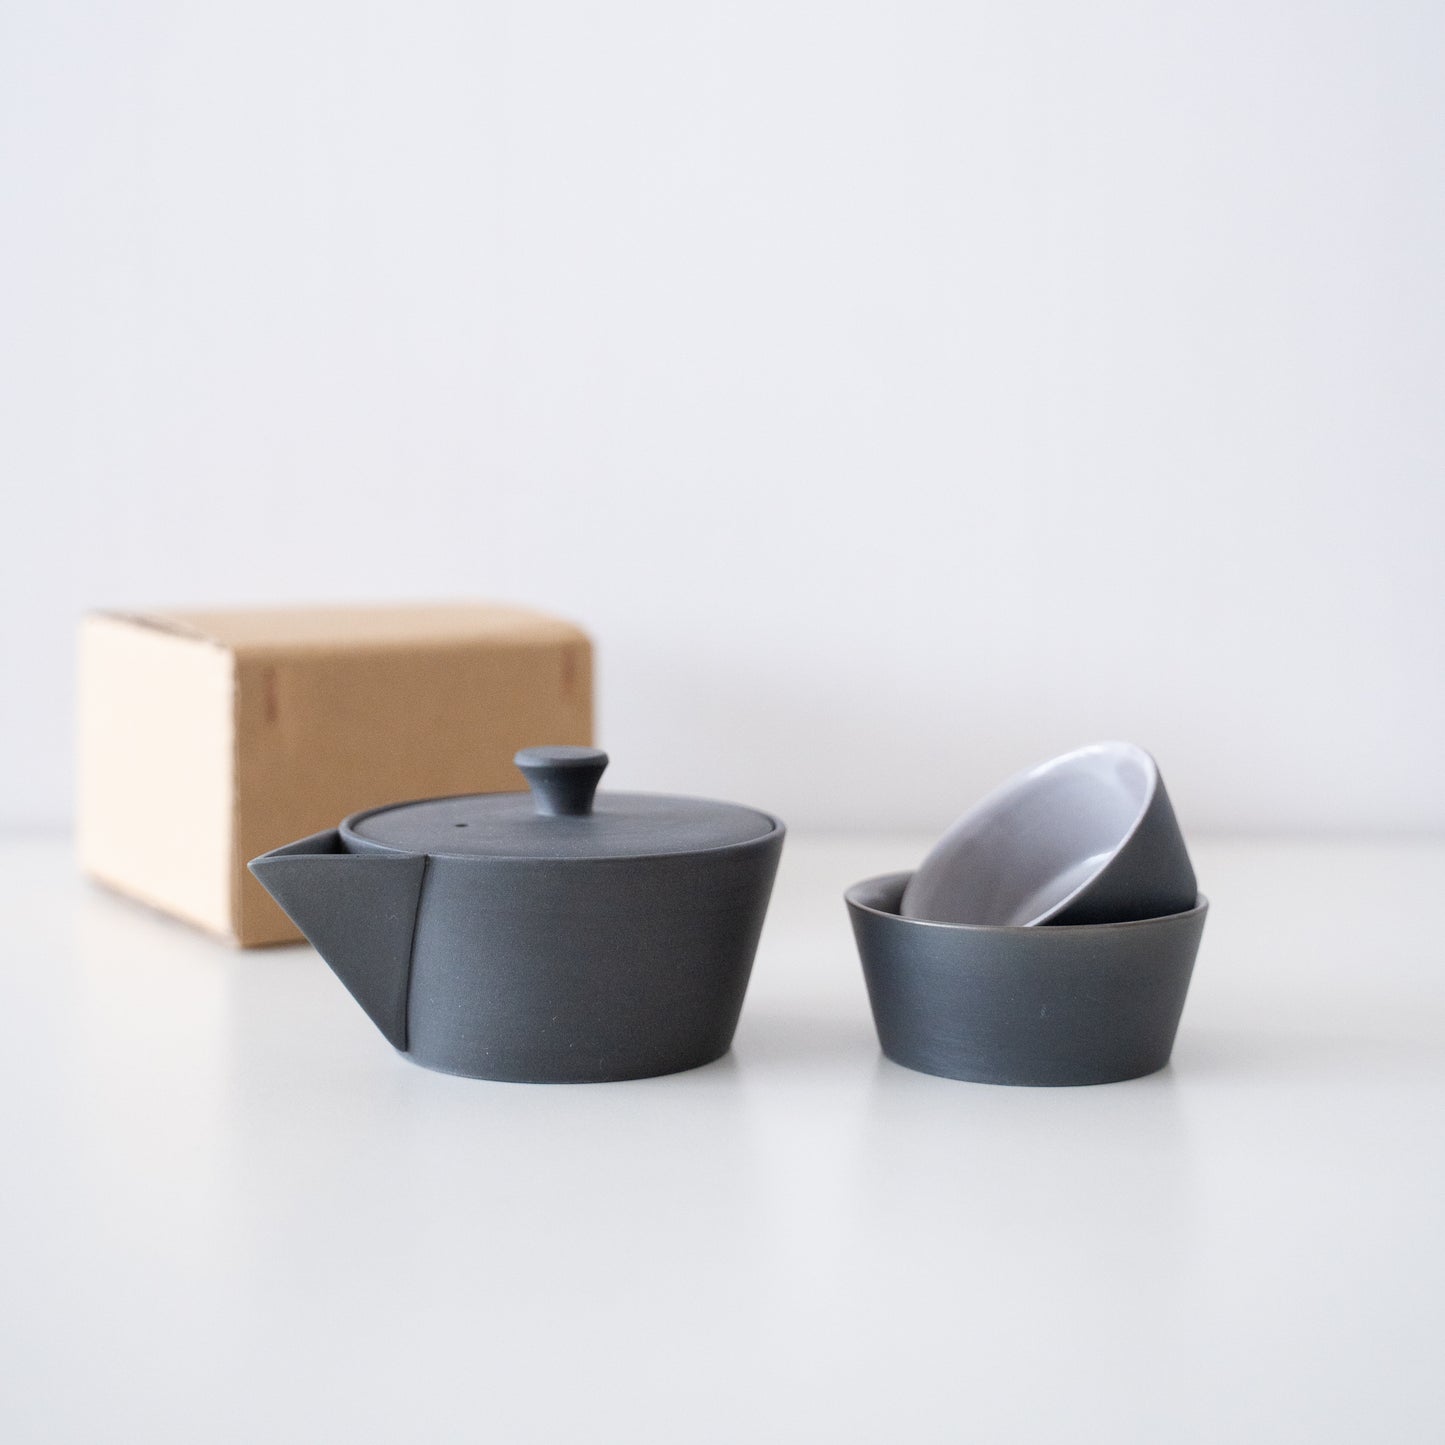 Nested Tea Set (Teapot and Teacups) - Black